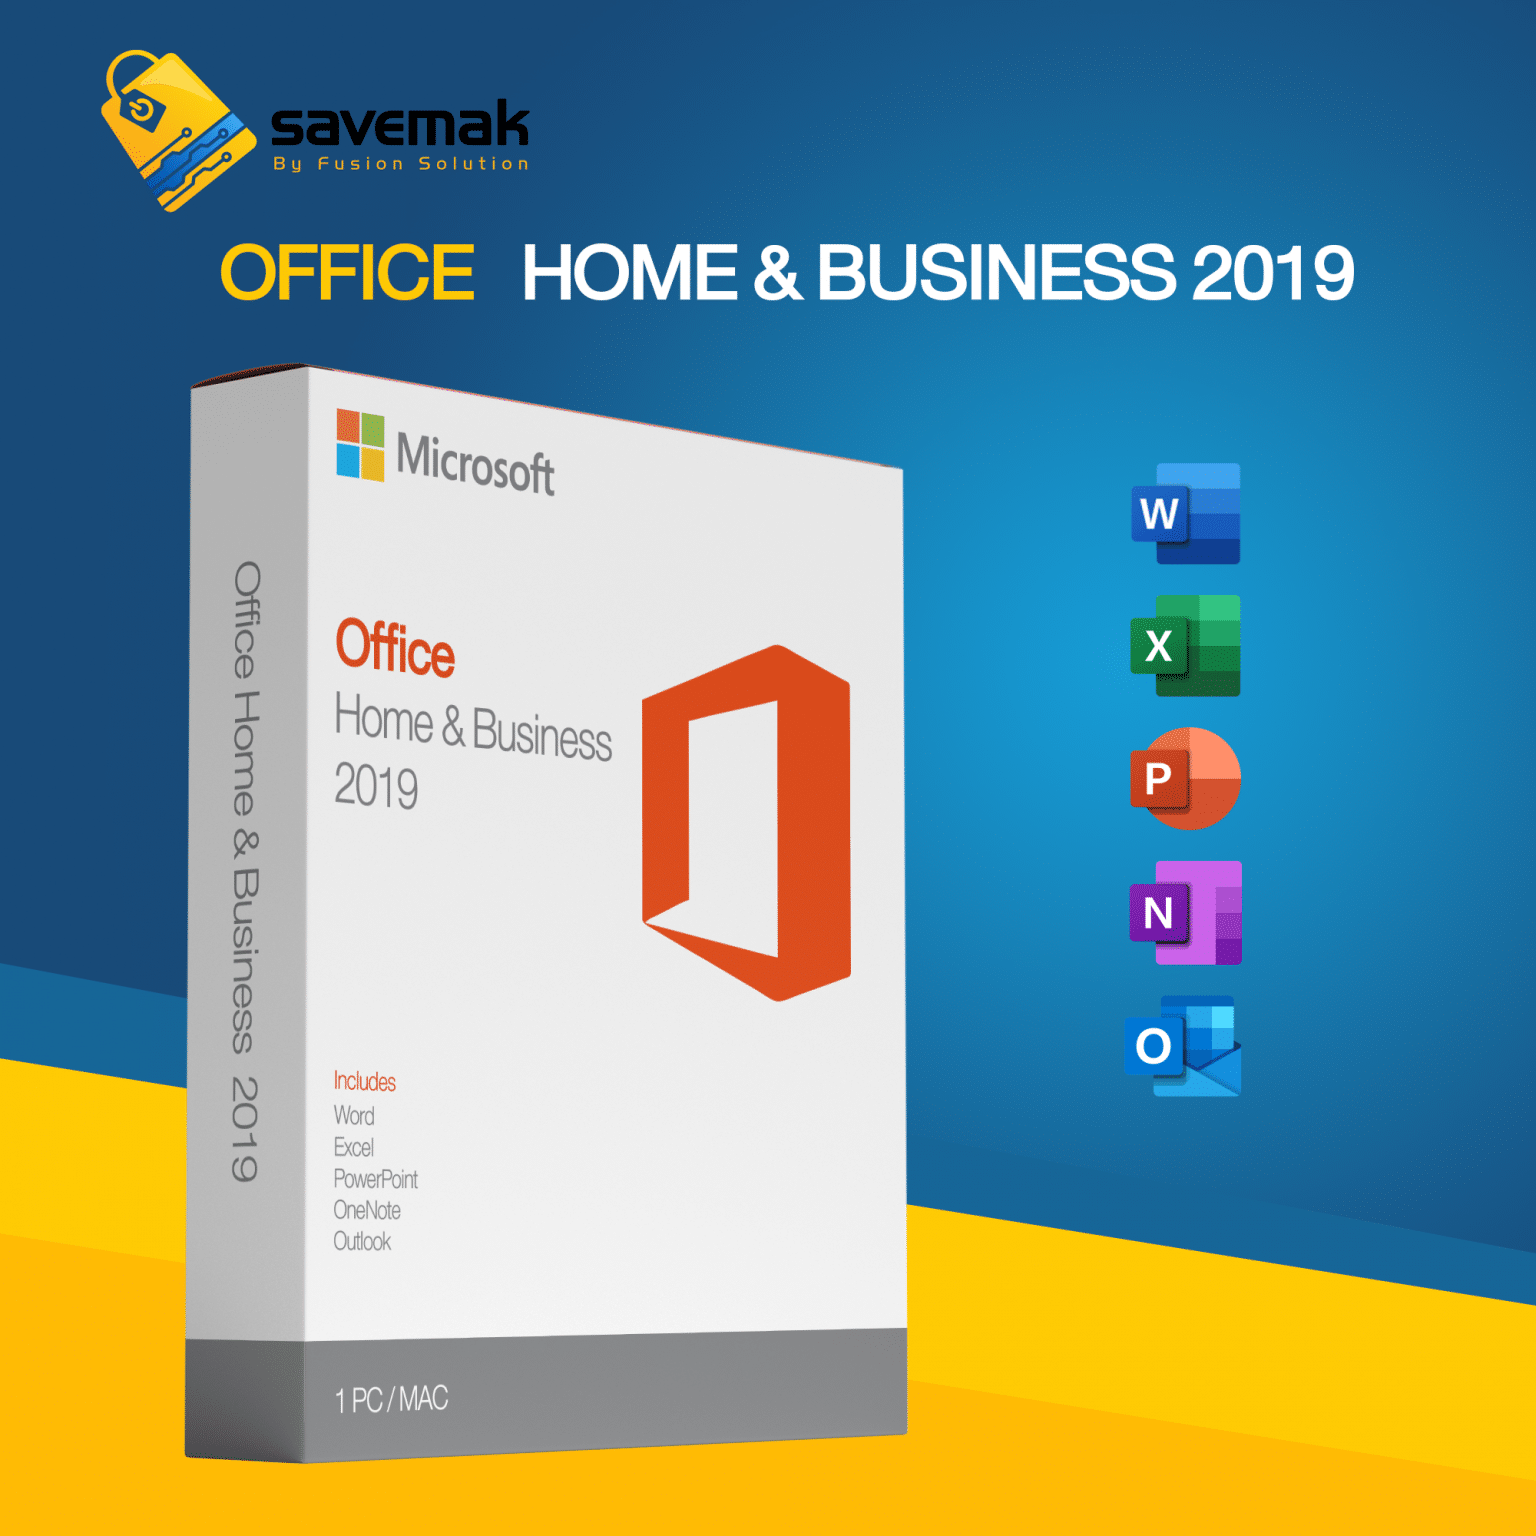 Microsoft Office 2019 Home and Business (Win/Mac) ขอราคาพิเศษติดต่อ